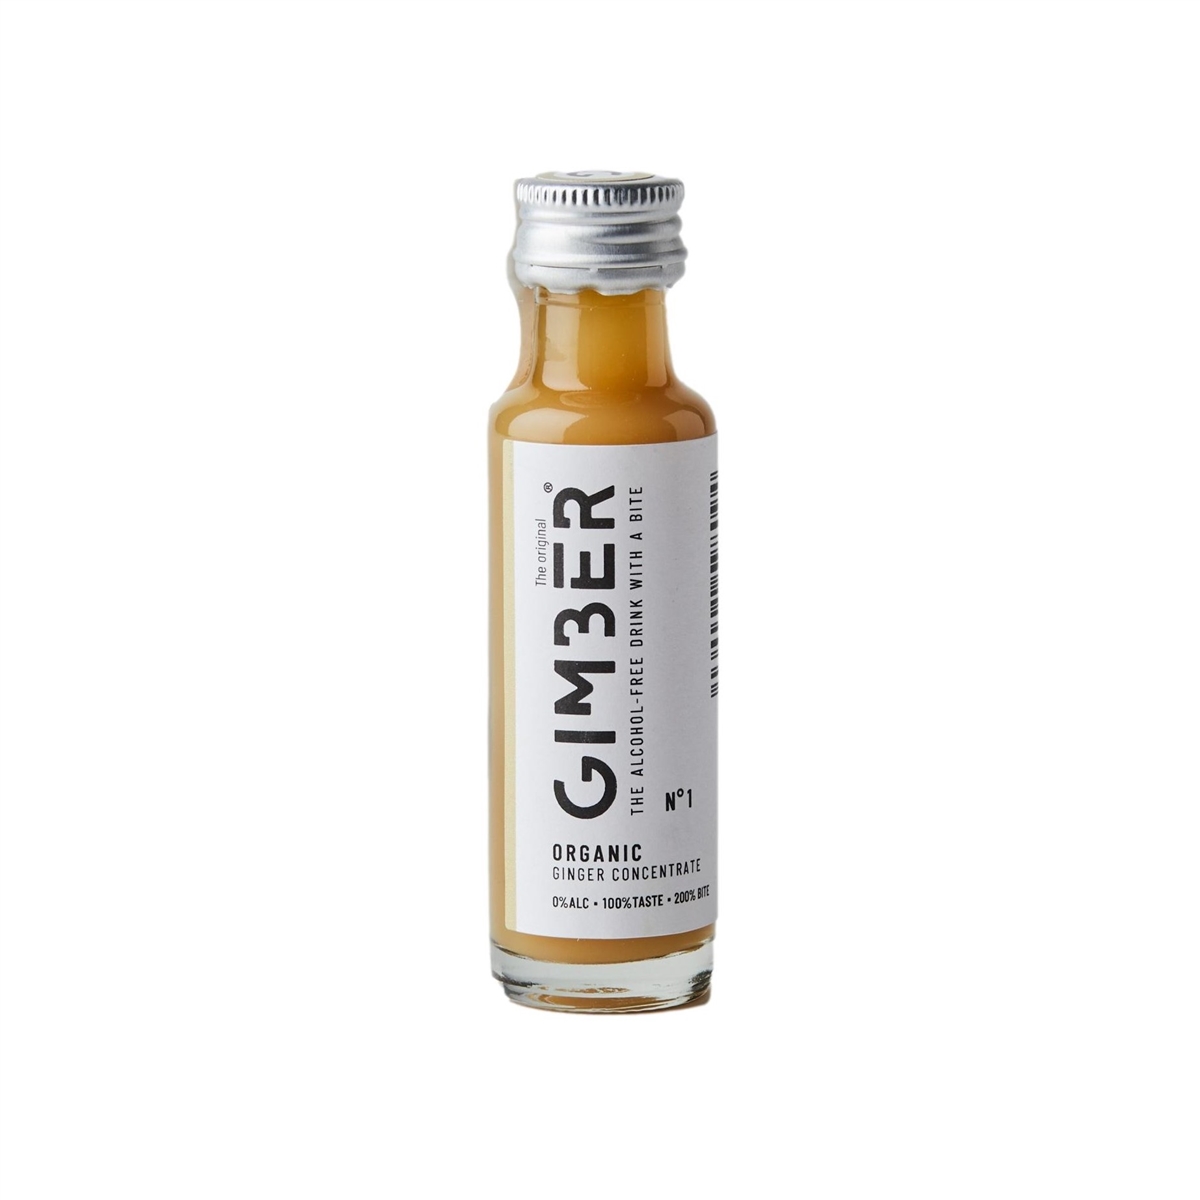 Gimber N°1 Original - Alcohol-free drink with Ginger, Lemon and